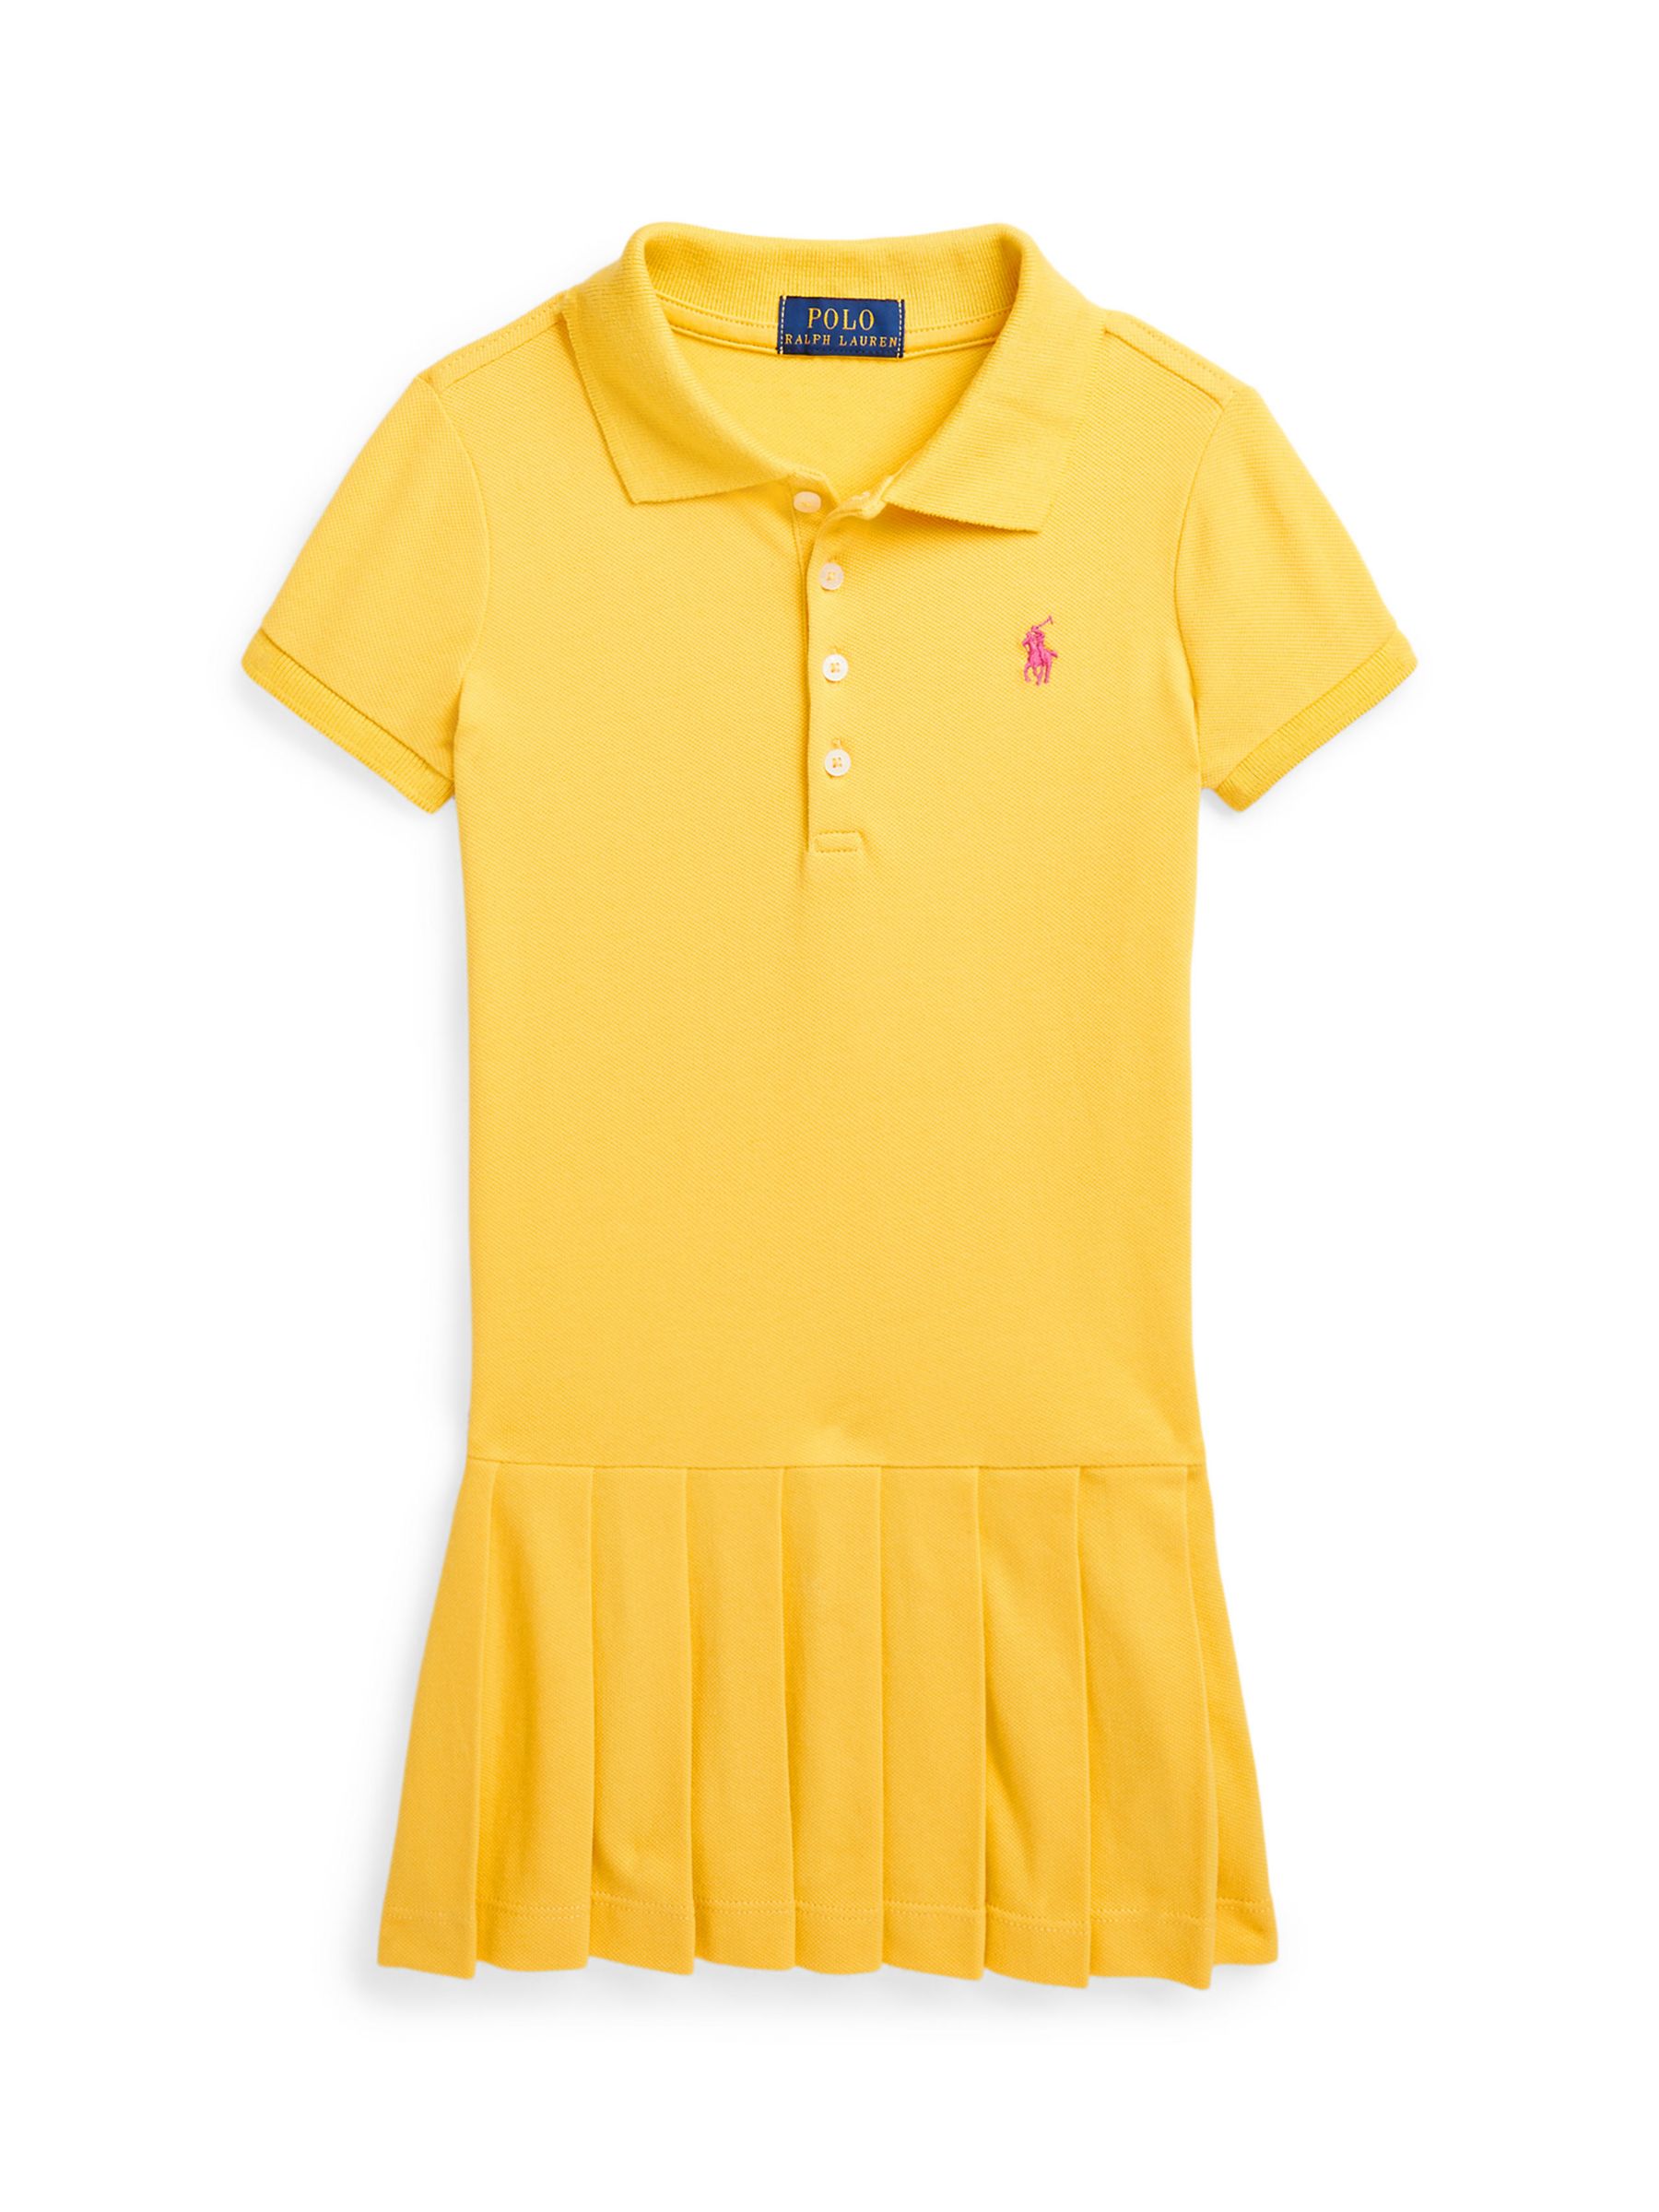 Ralph Lauren Kids' Pleated Polo Dress, Chrome Yellow, 2 years